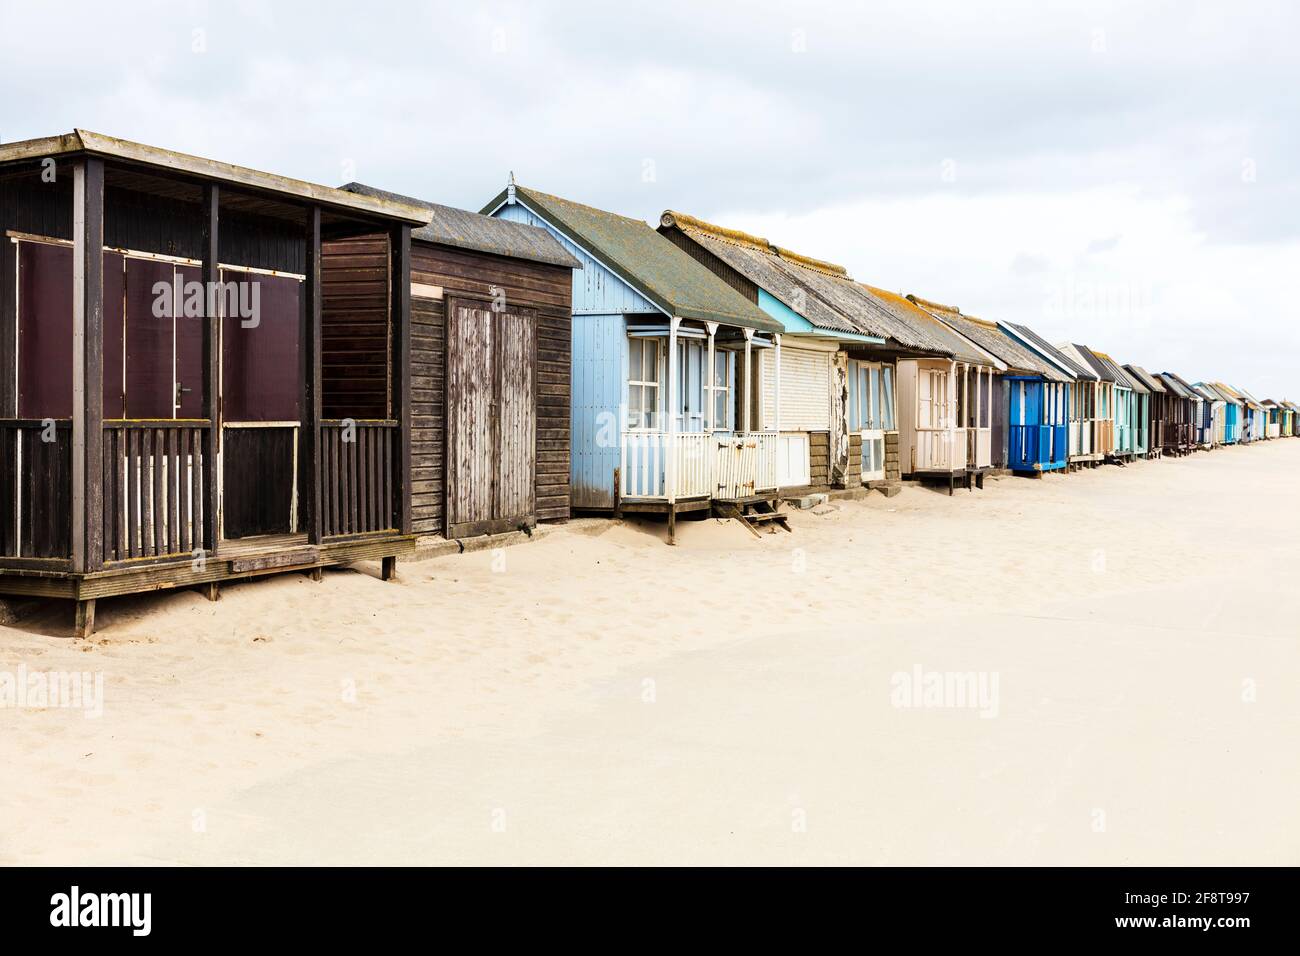 Sandilands beach huts, Sandilands chalets, beach huts, chalets, Sandilands, Sutton on sea, Lincolnshire, UK, Sandilands chalets, Sandilands beach Stock Photo